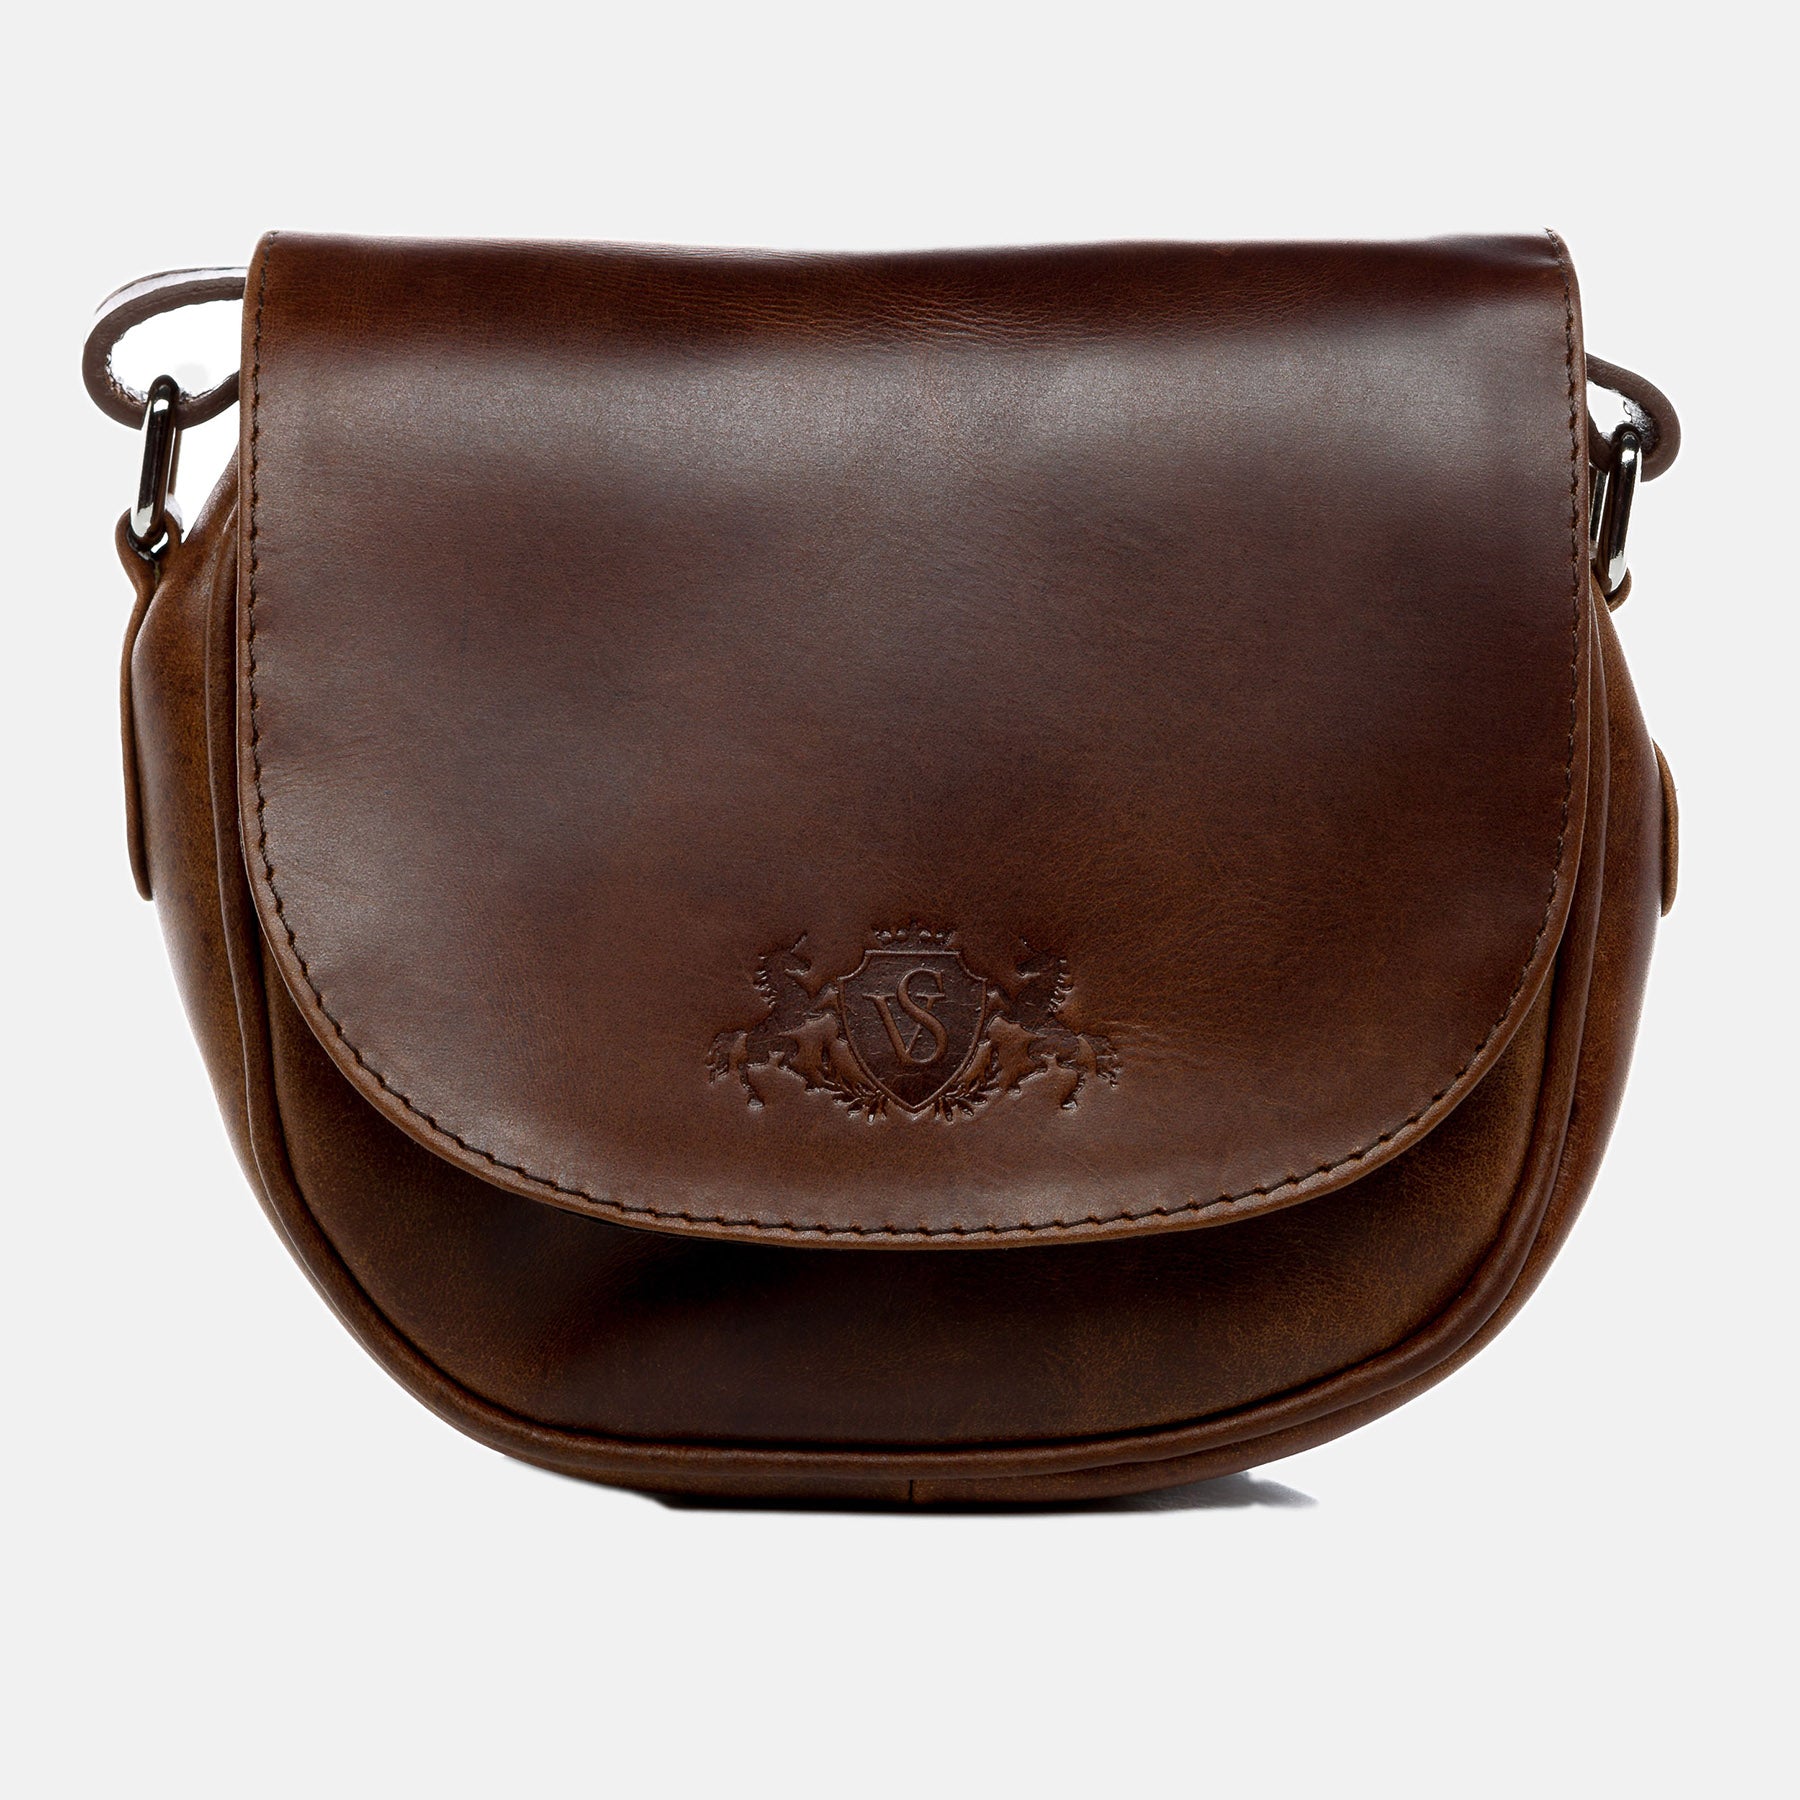 Shoulder bag BRIGHTON natural leather brown-cognac